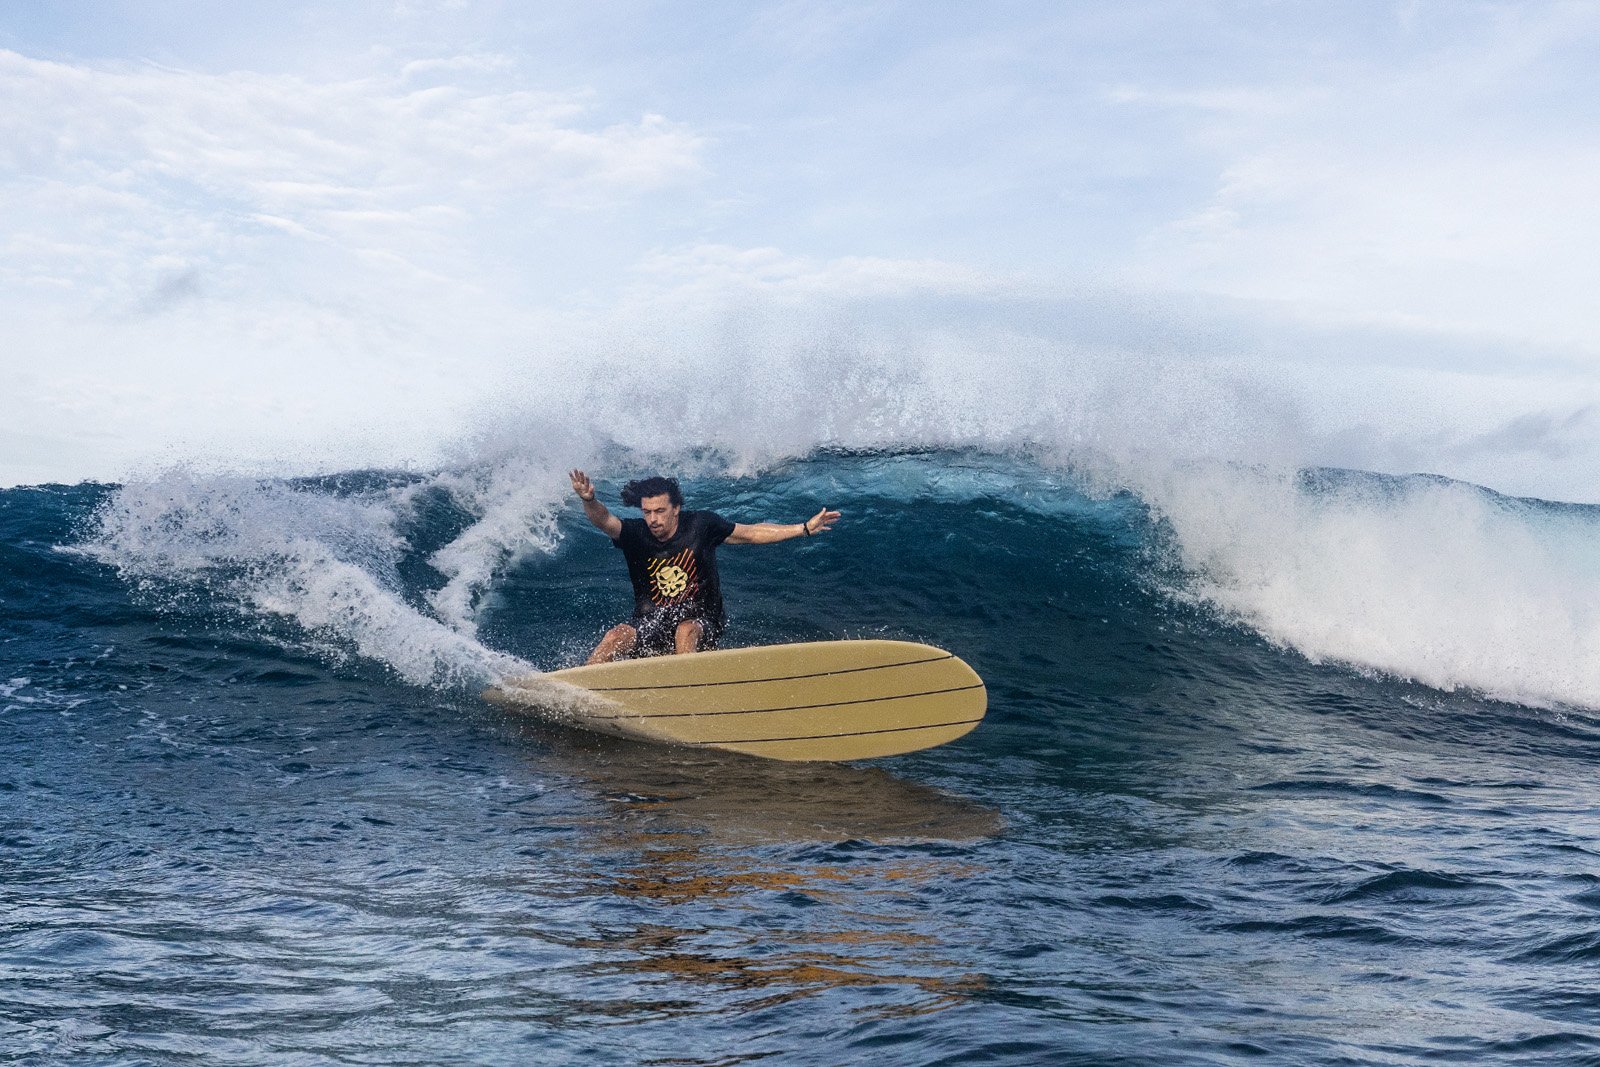 Surfer on Delpero Longboard Classic during a radical turn